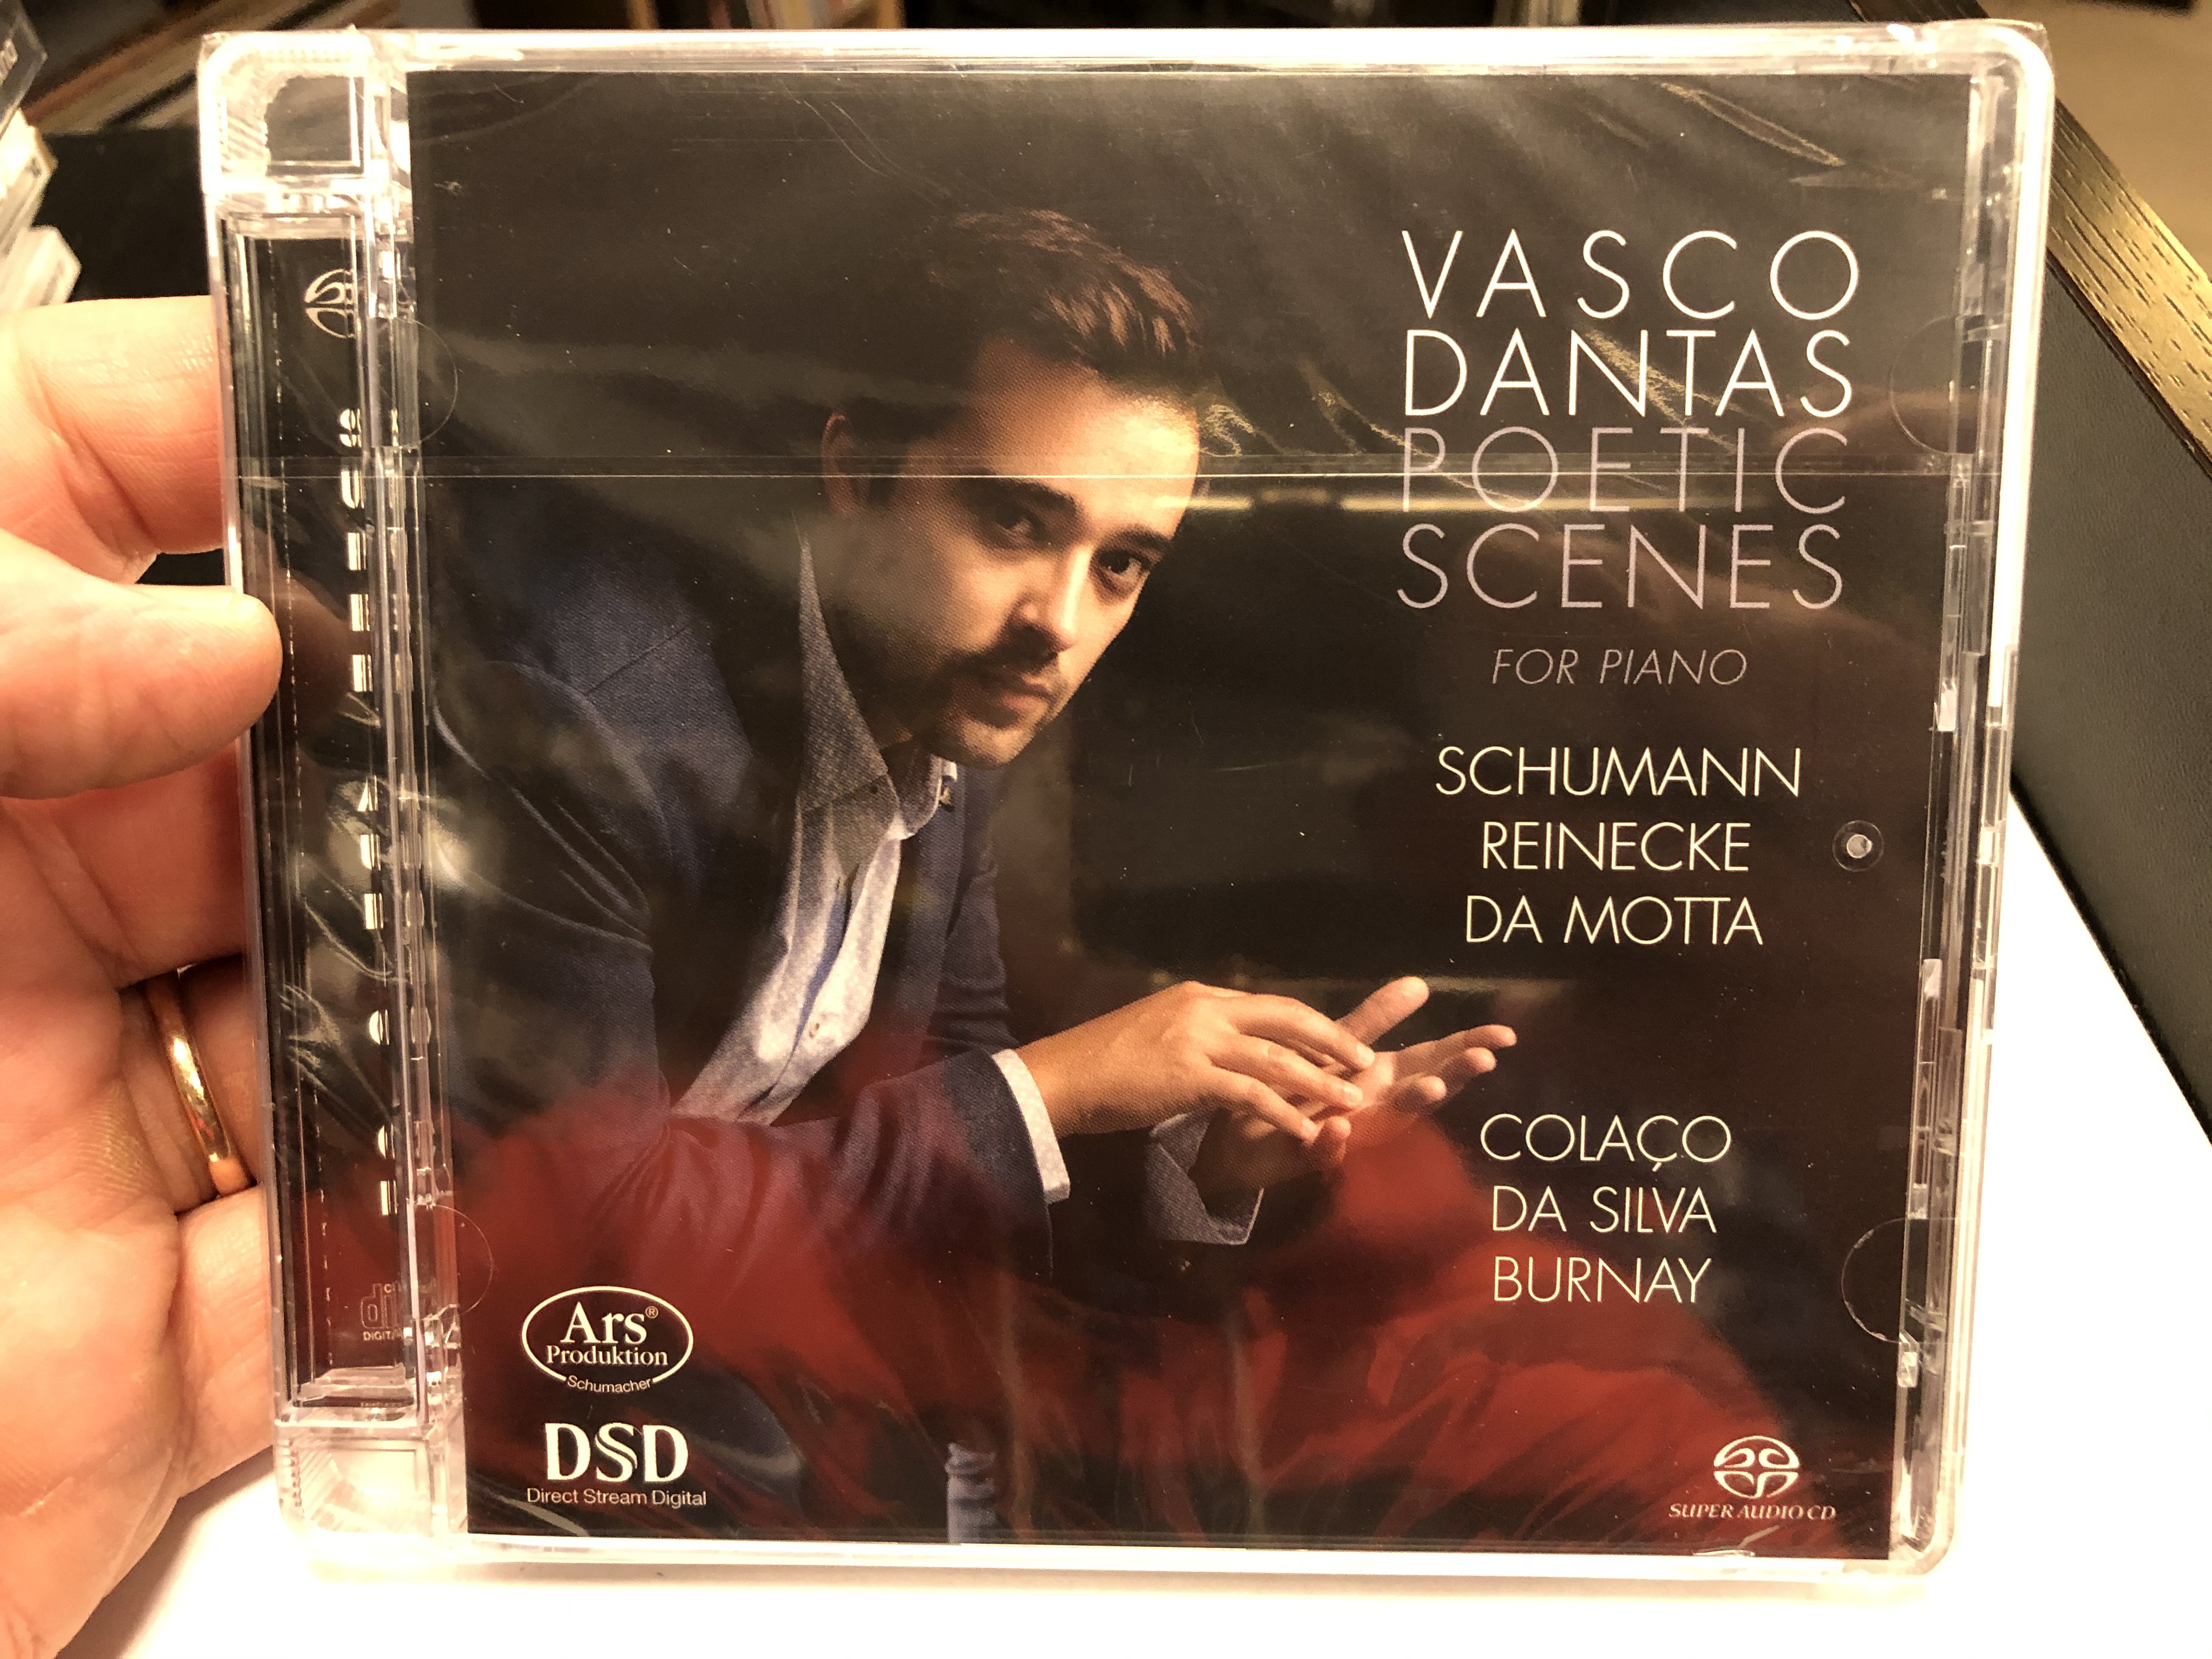 vasco-dantas-poetic-scenes-for-piano-schumann-reinecke-da-motta-colaco-da-silva-burnay-ars-produktion-audio-cd-2020-stereo-4260052382967-1-.jpg